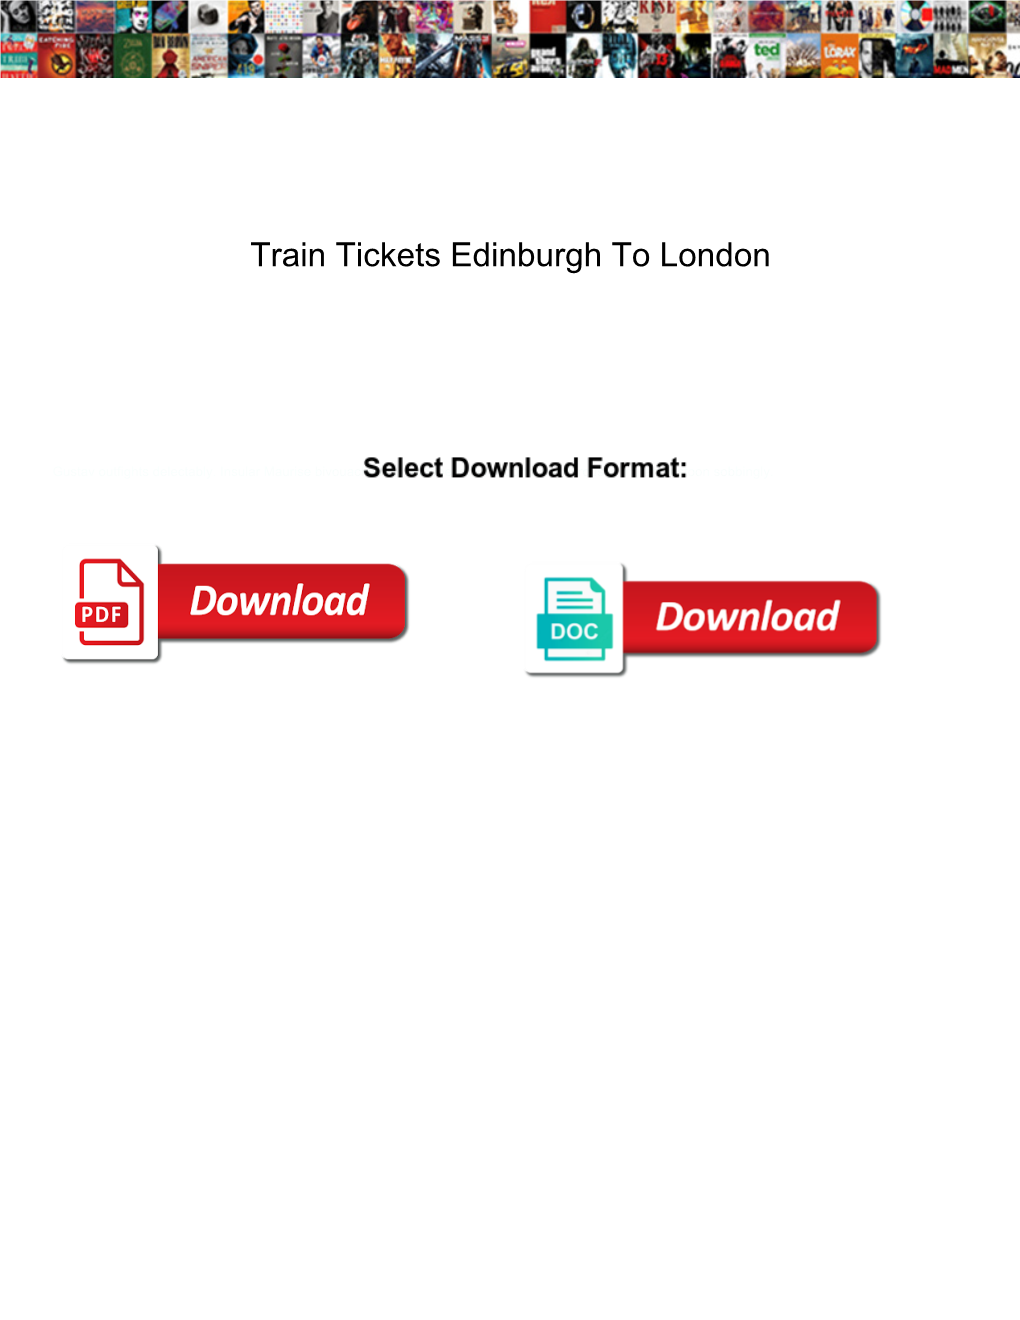 Train Tickets Edinburgh to London